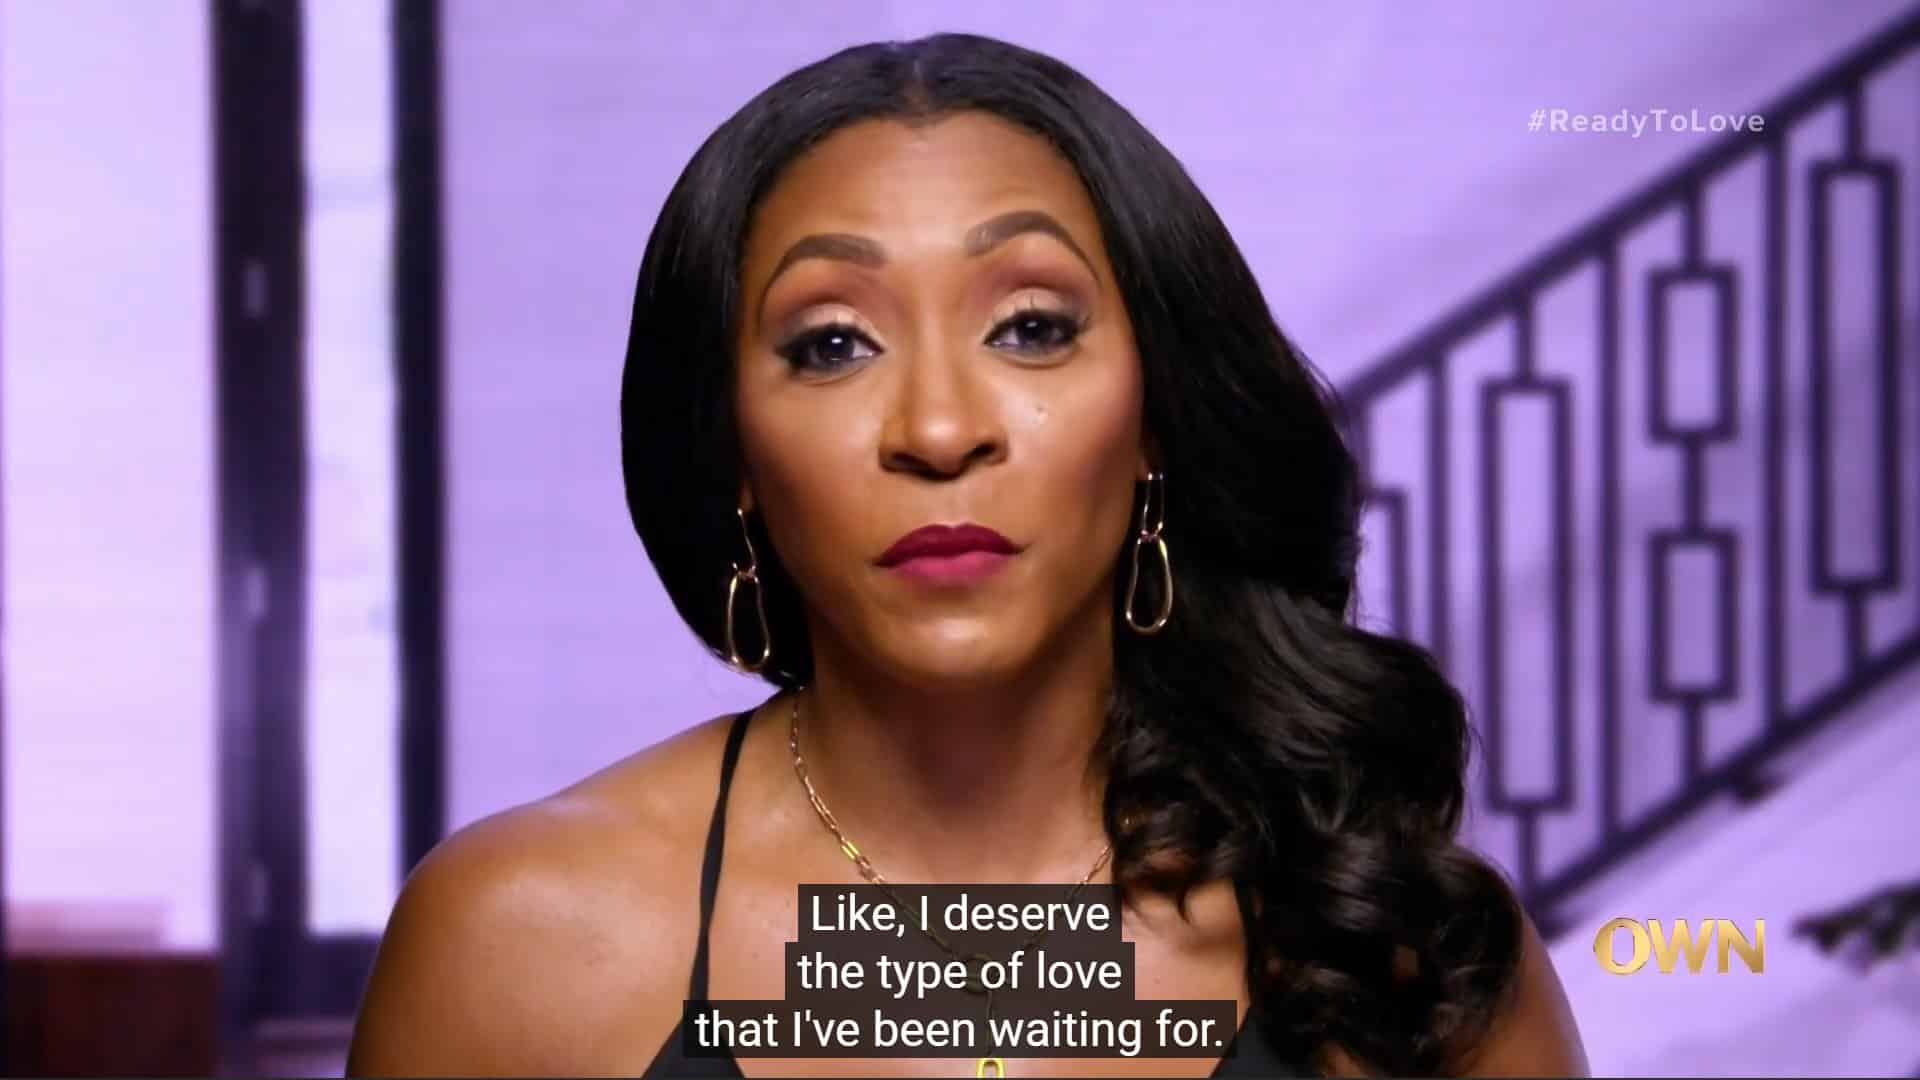 DaKiya saying she deserves love